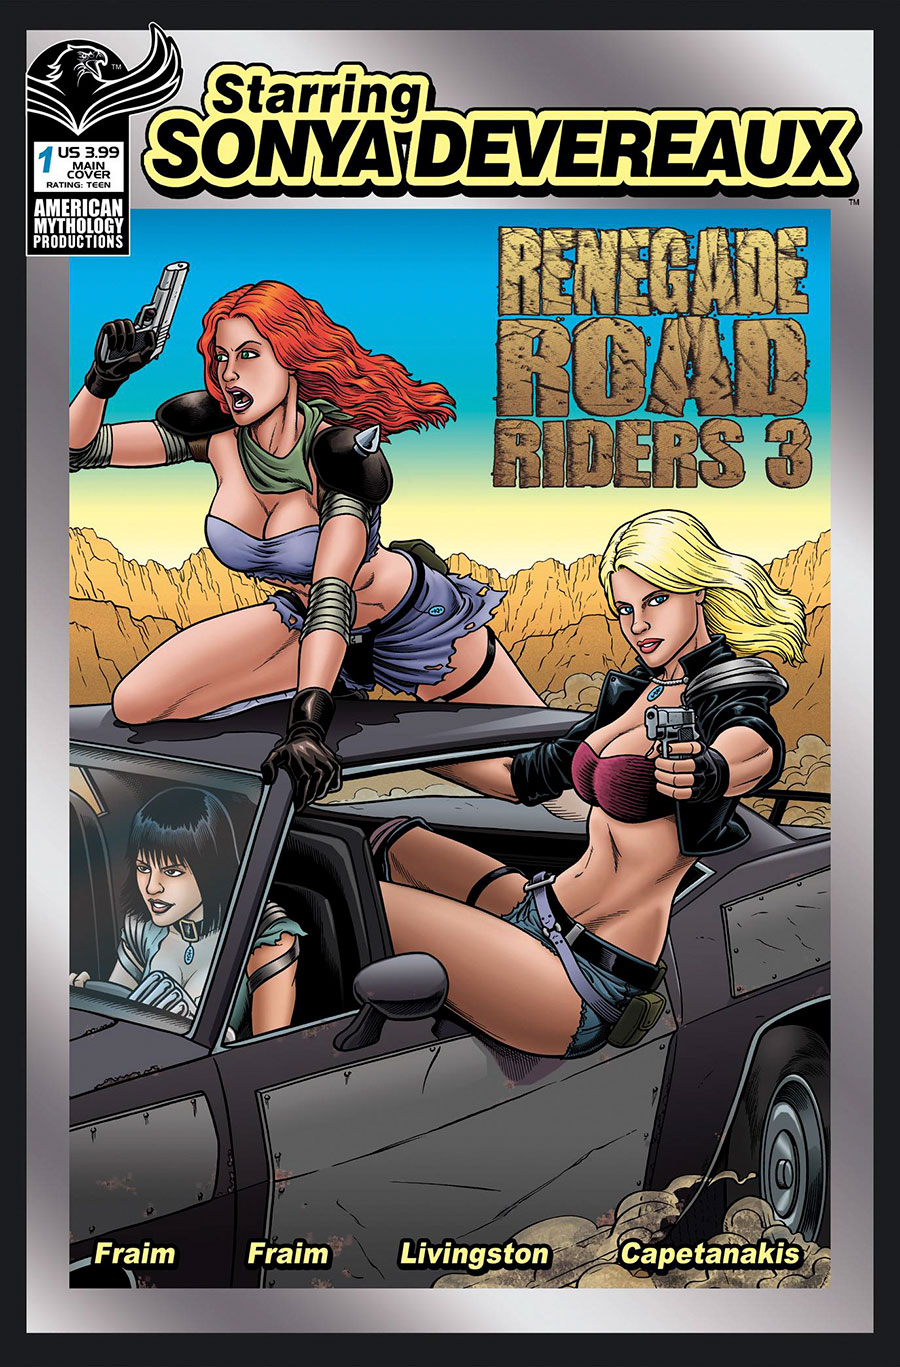 Starring Sonya Devereaux Renegade Road Riders 3 #1 Cover A Regular Brendon Fraim & Brian Fraim Cover